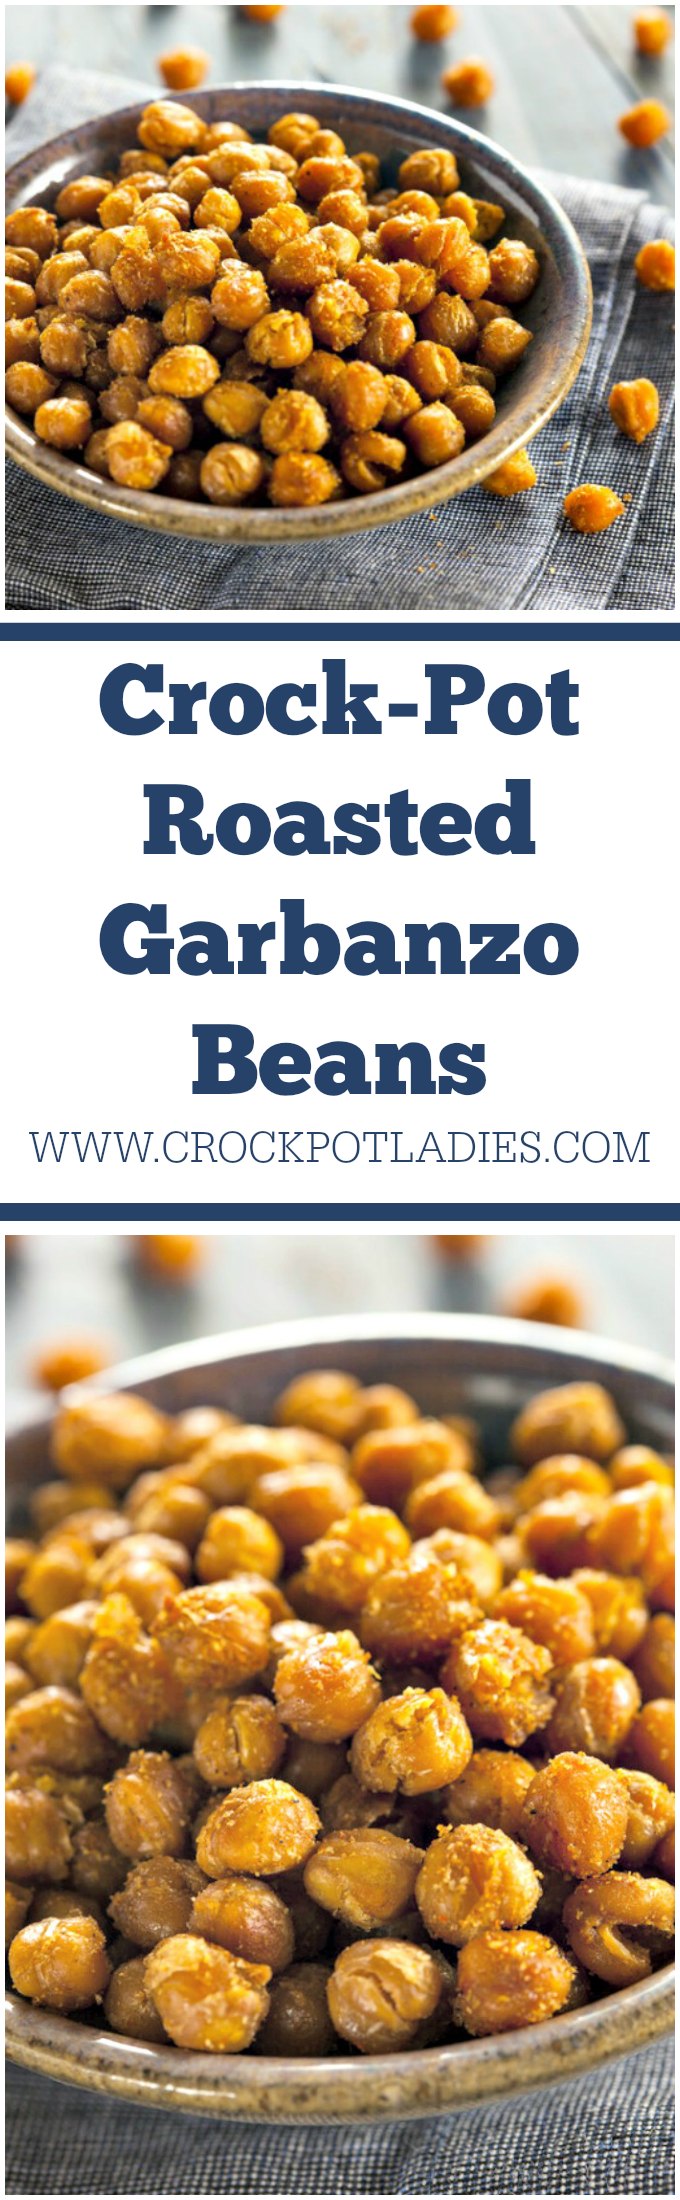 Crock-Pot Roasted Garbanzo Beans